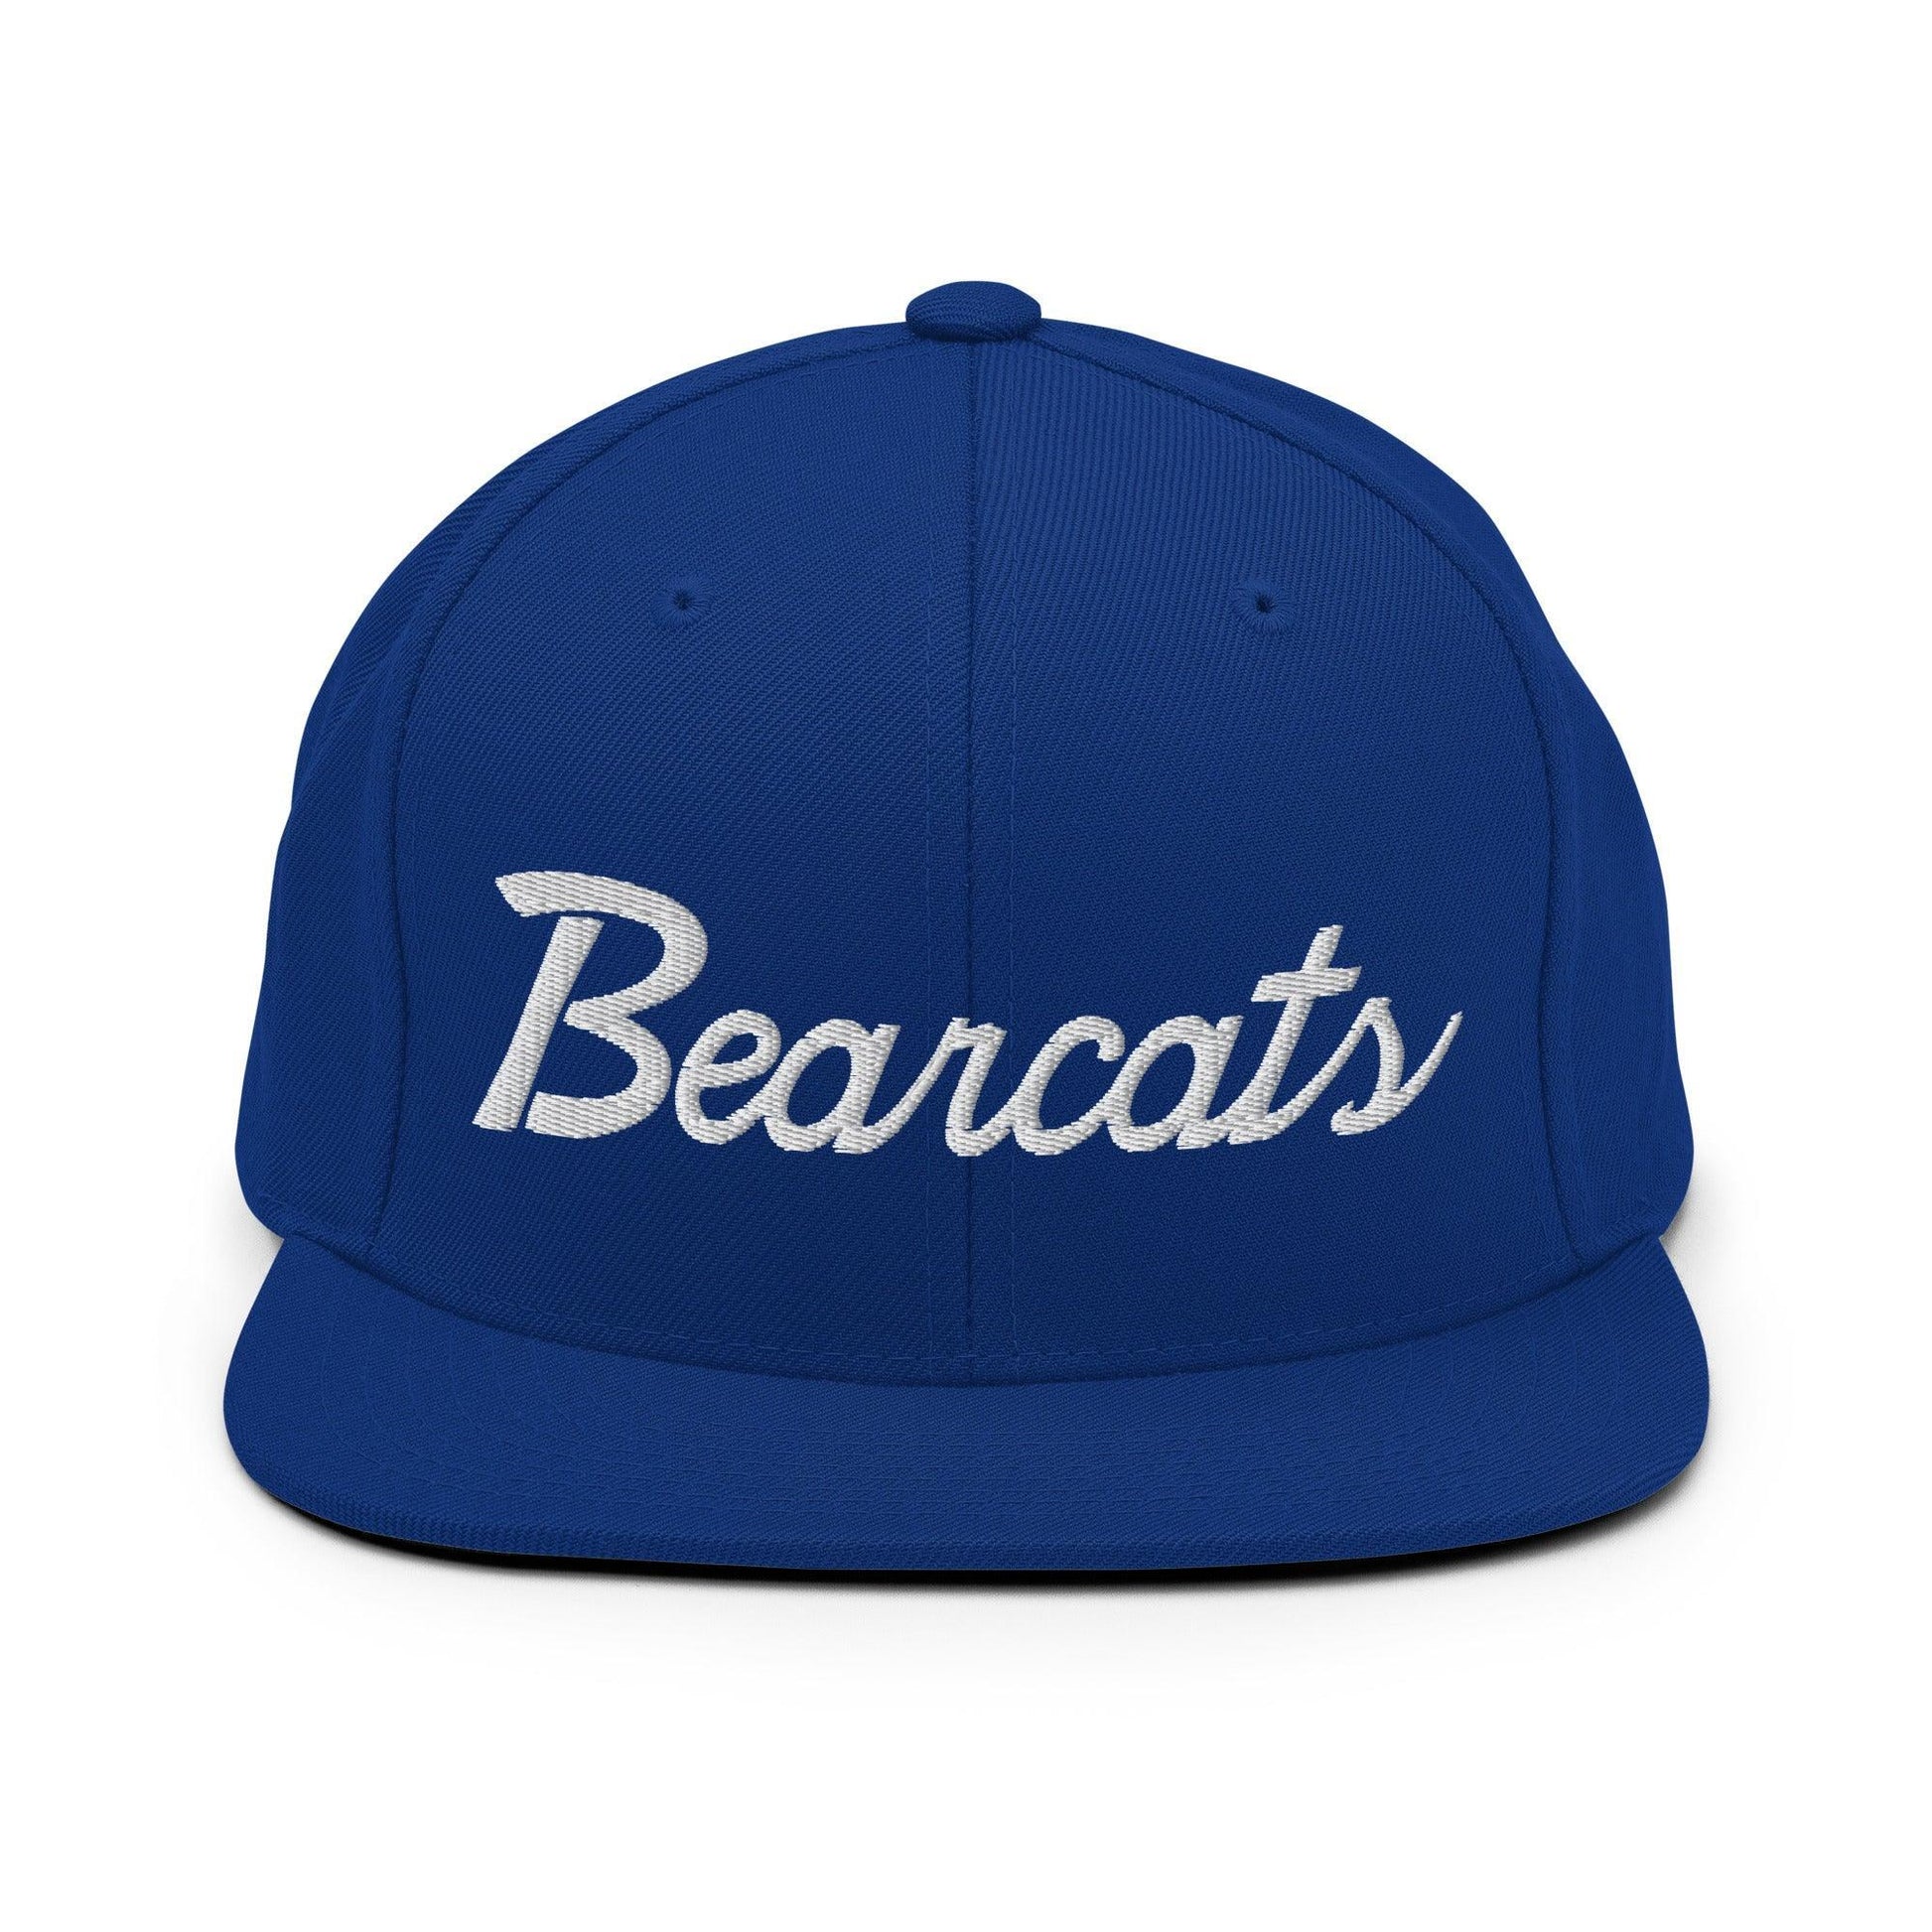 Bearcats School Mascot Script Snapback Hat Royal Blue